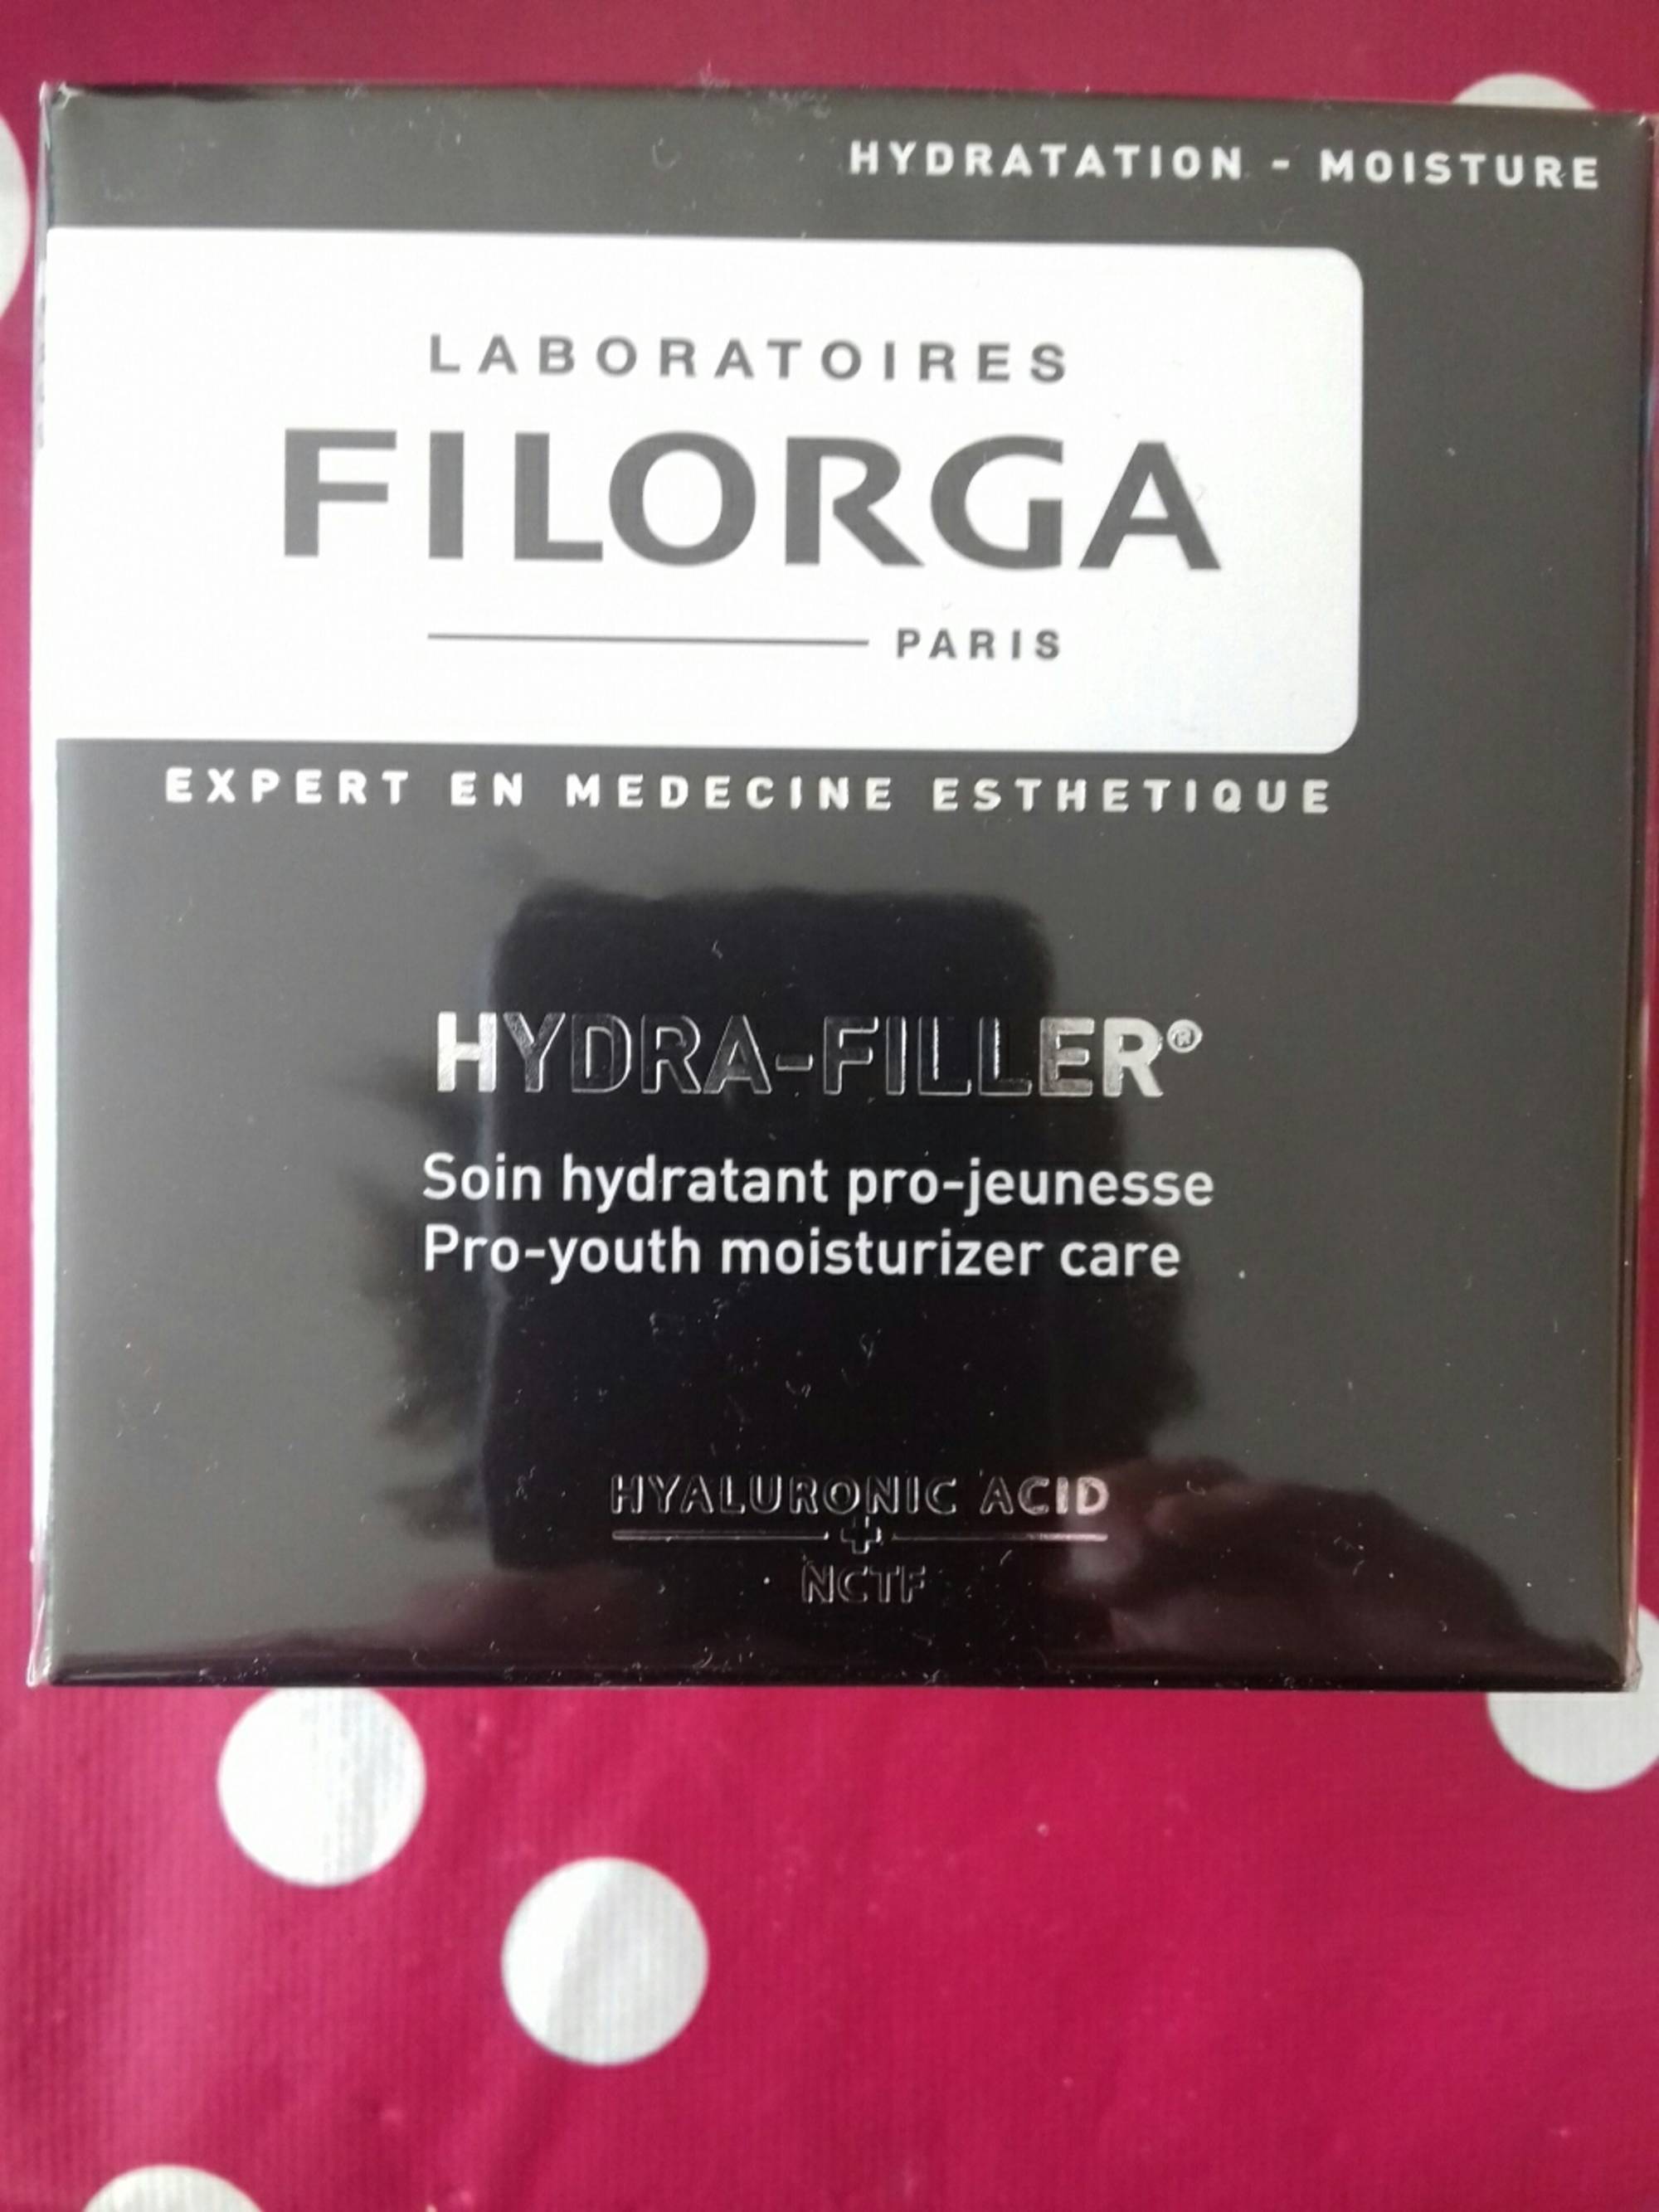 FILORGA - Hydra-filler - Soin hydratant pro-jeunesse